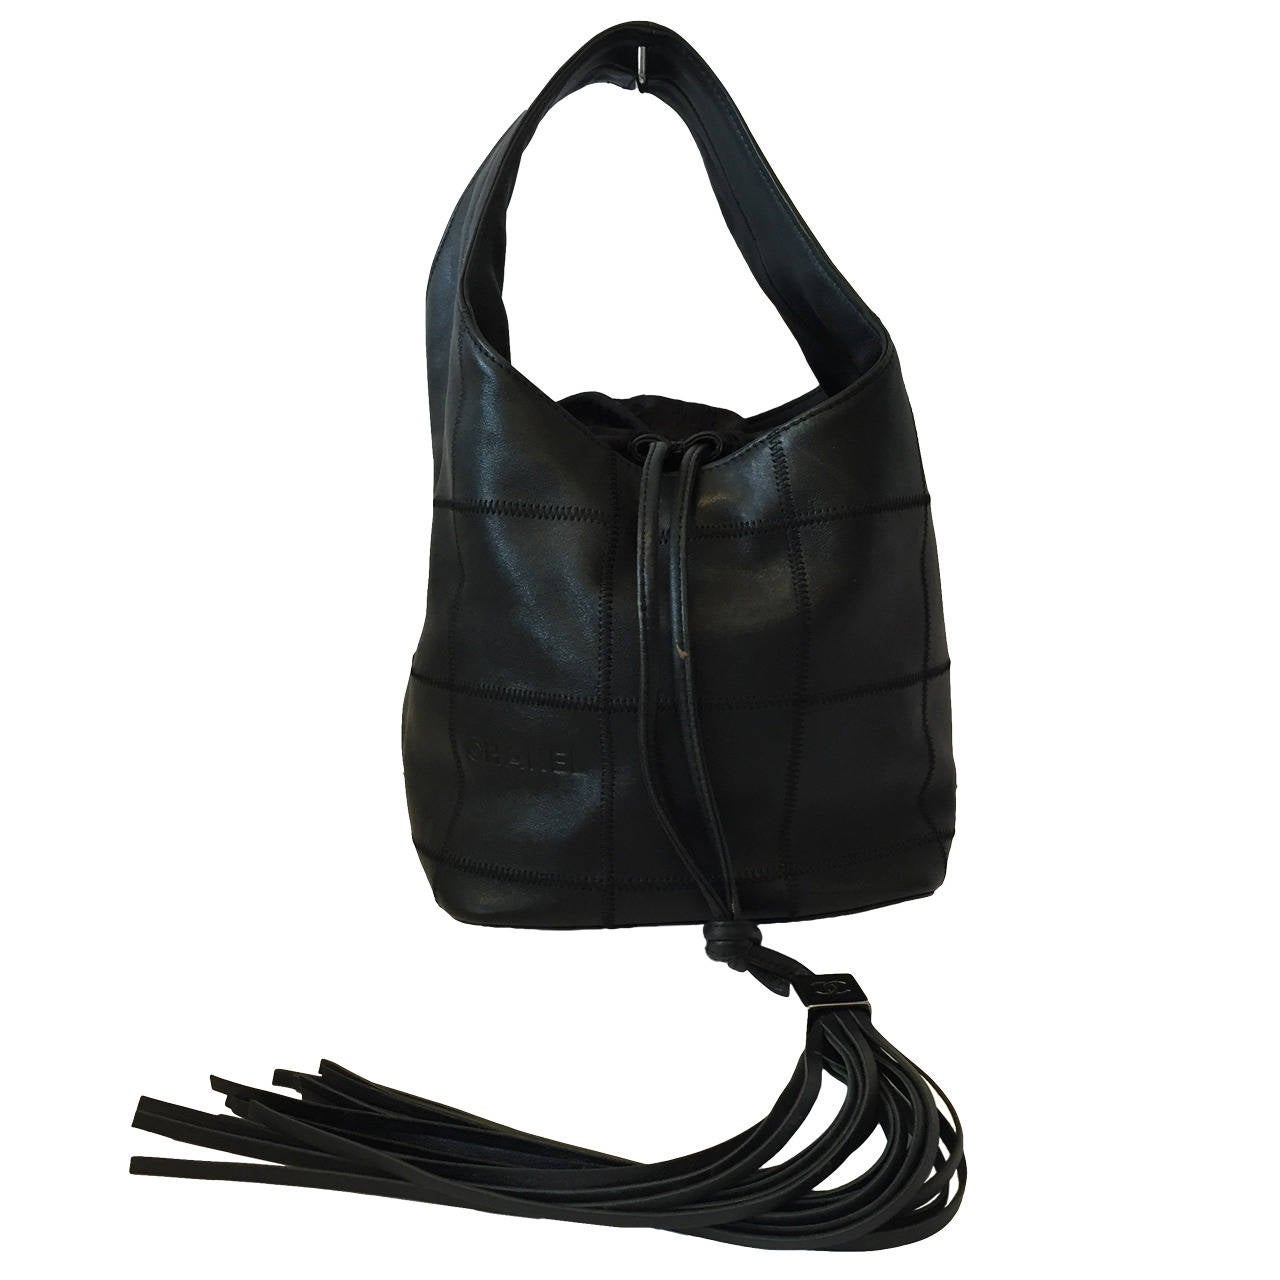 Chanel CC Satin Black Envelope Tassel Bag